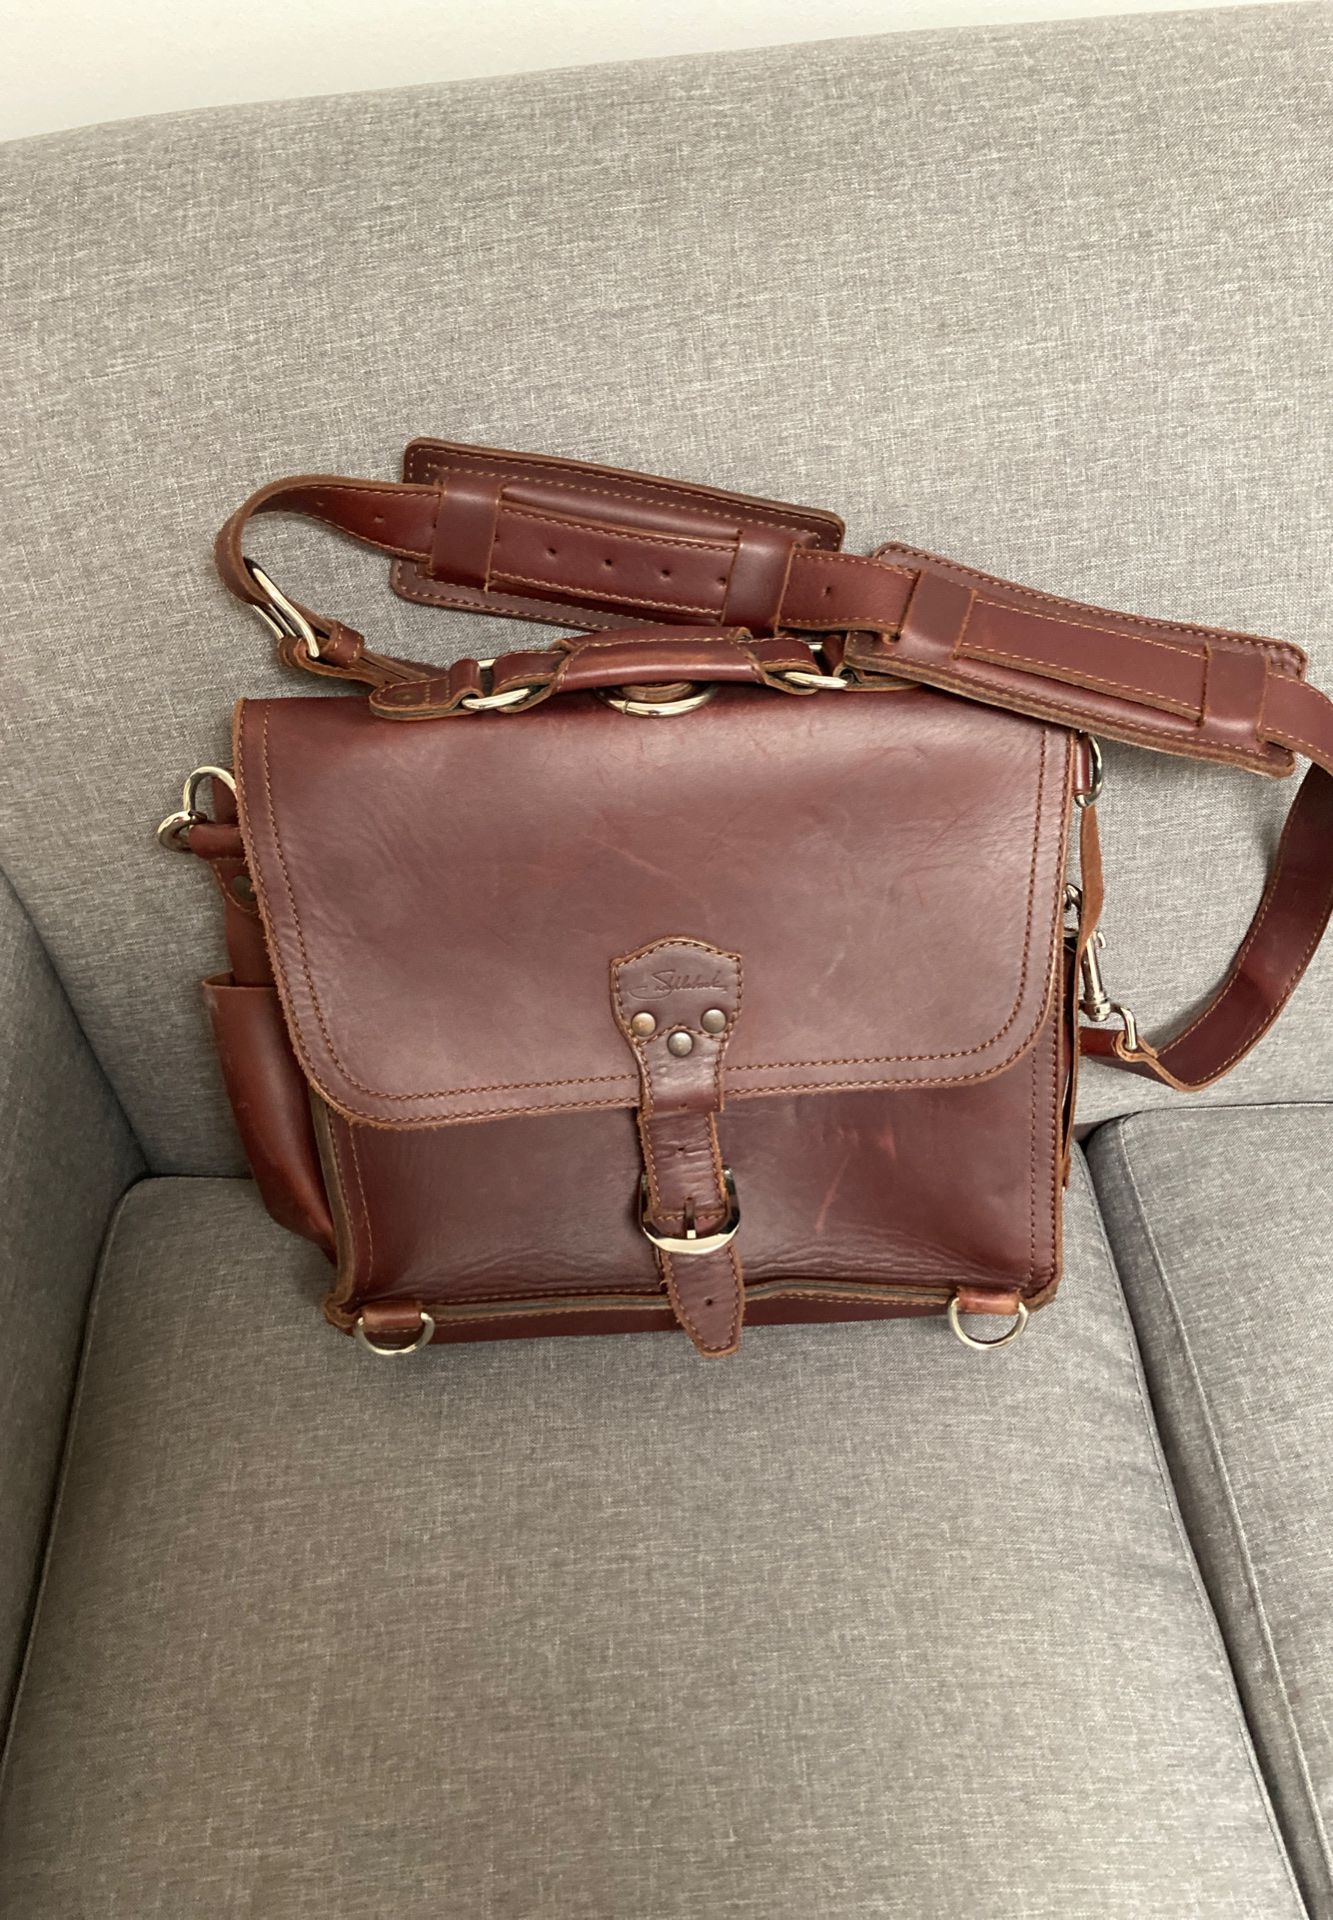 Saddleback Leather messenger bag- lightly used